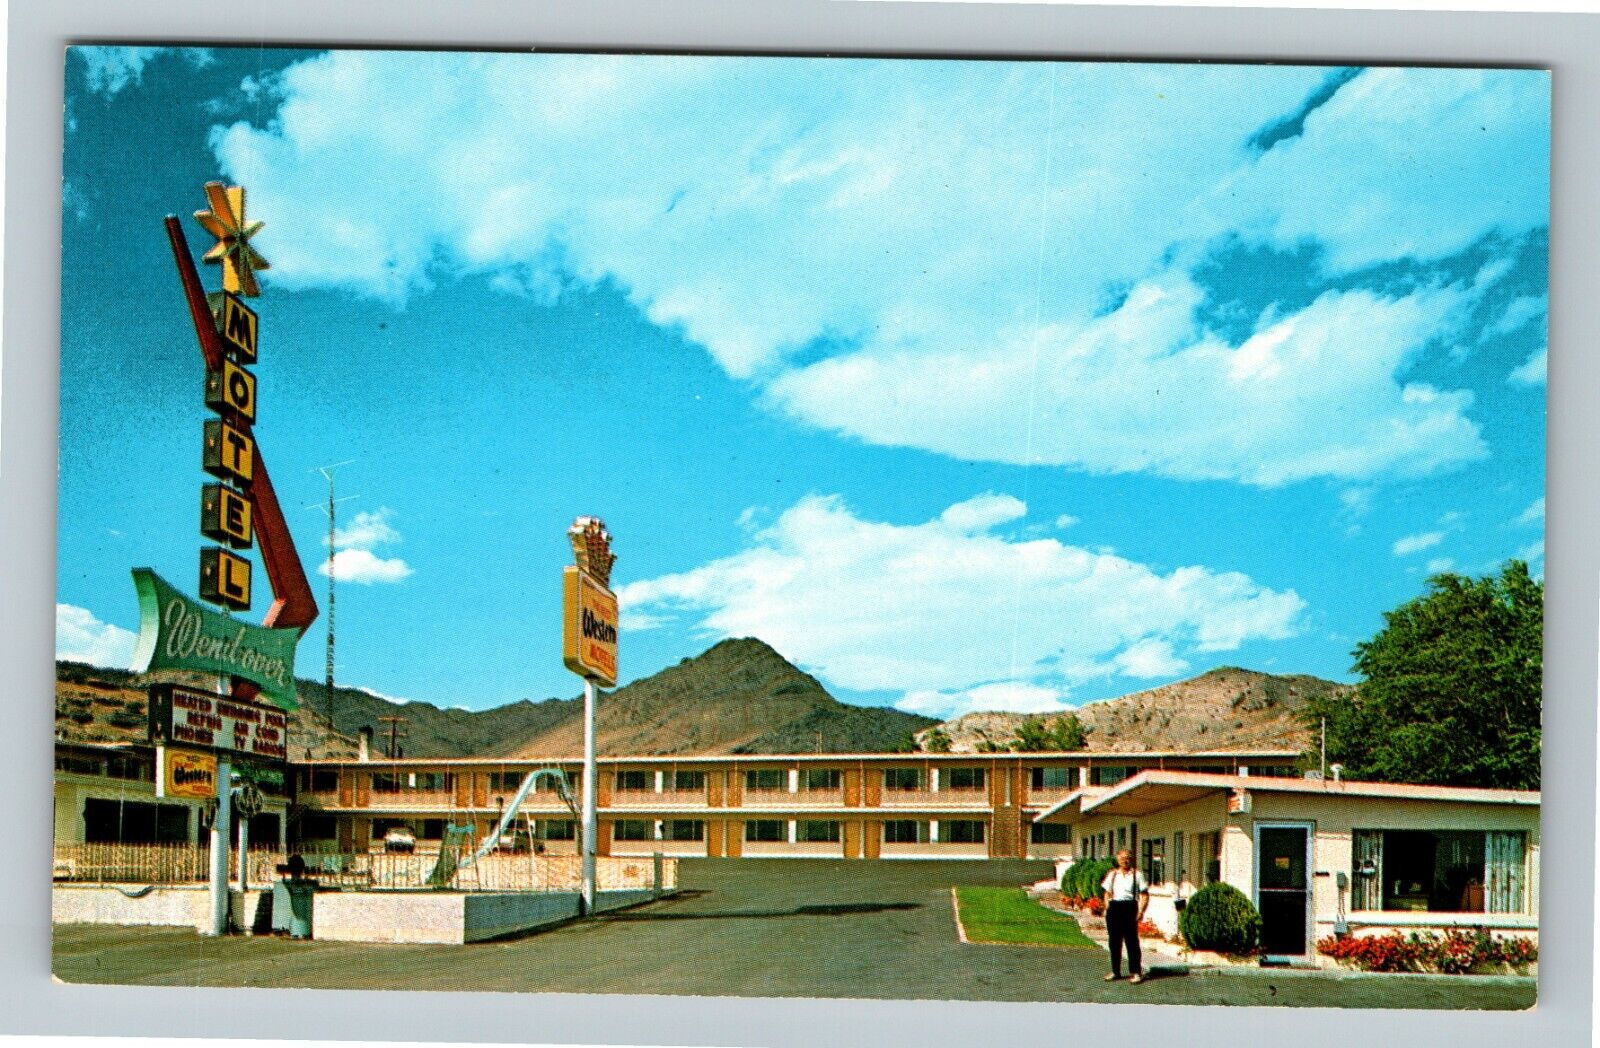 Wendover UT-Utah, Wend-over Motel, Antique Vintage Souvenir Postcard